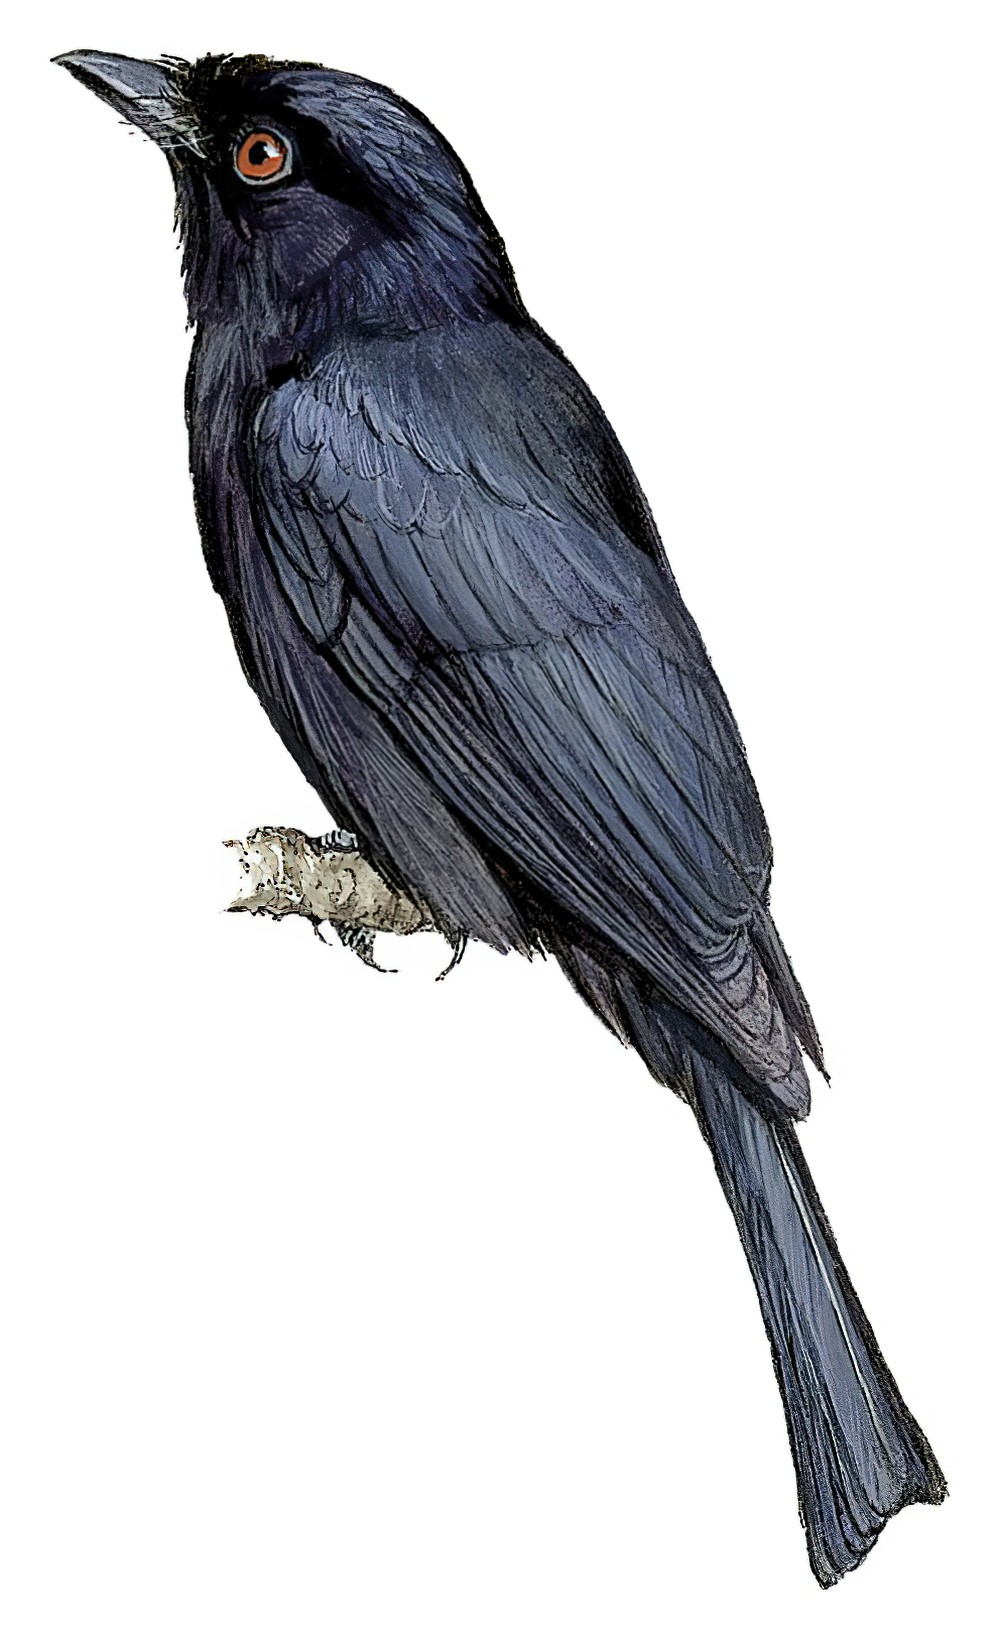 Common Square-tailed Drongo / Dicrurus ludwigii